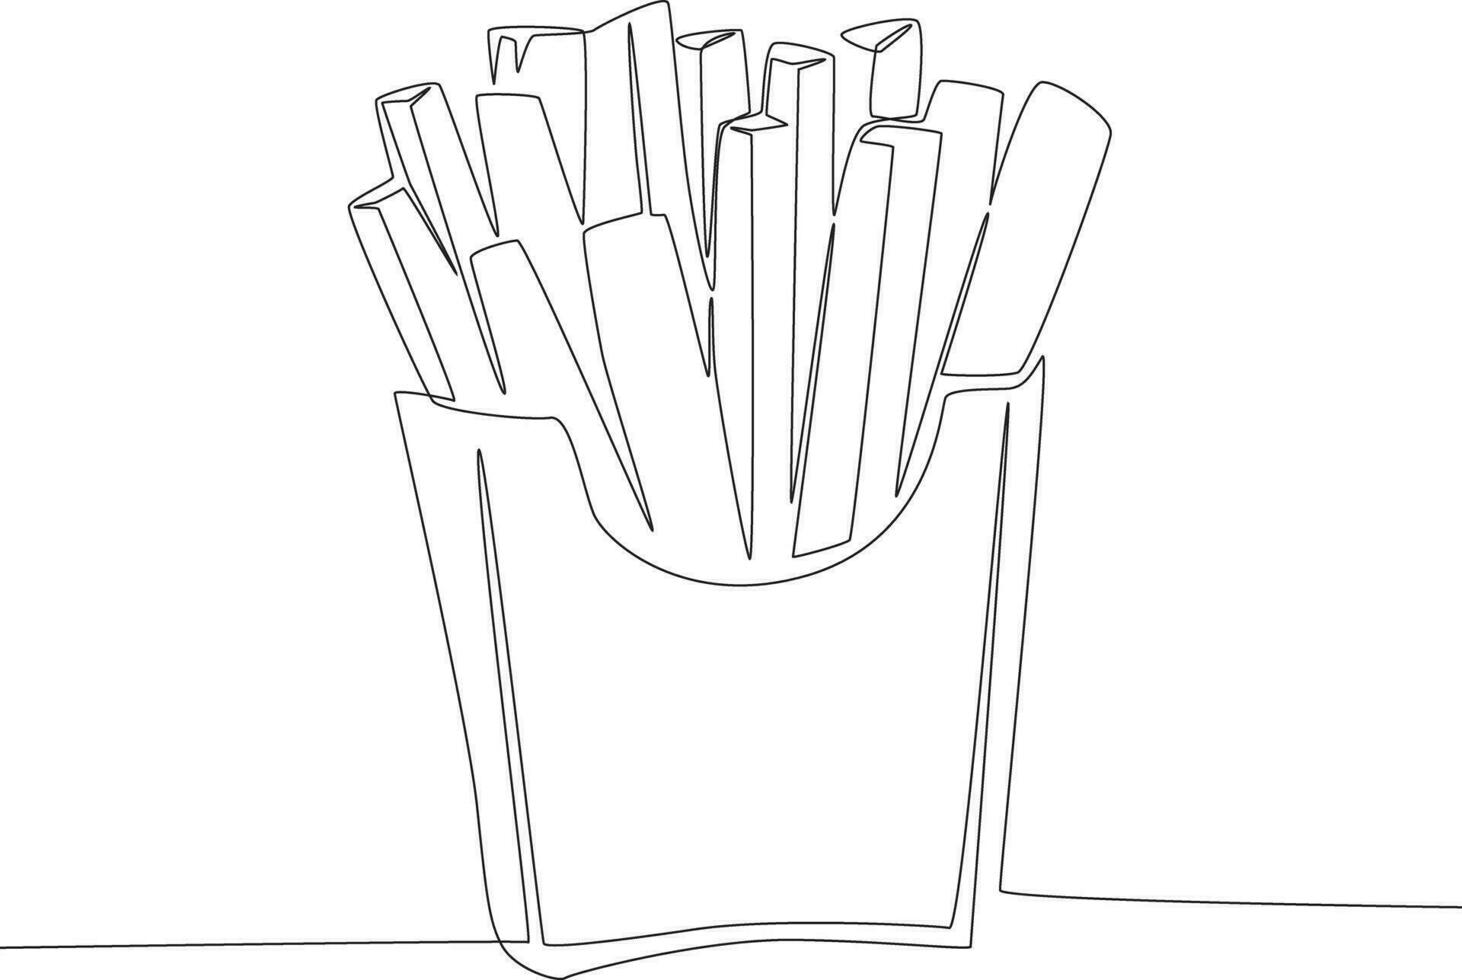 soltero continuo línea dibujo francés papas fritas en papel caja. global día padre concepto vector